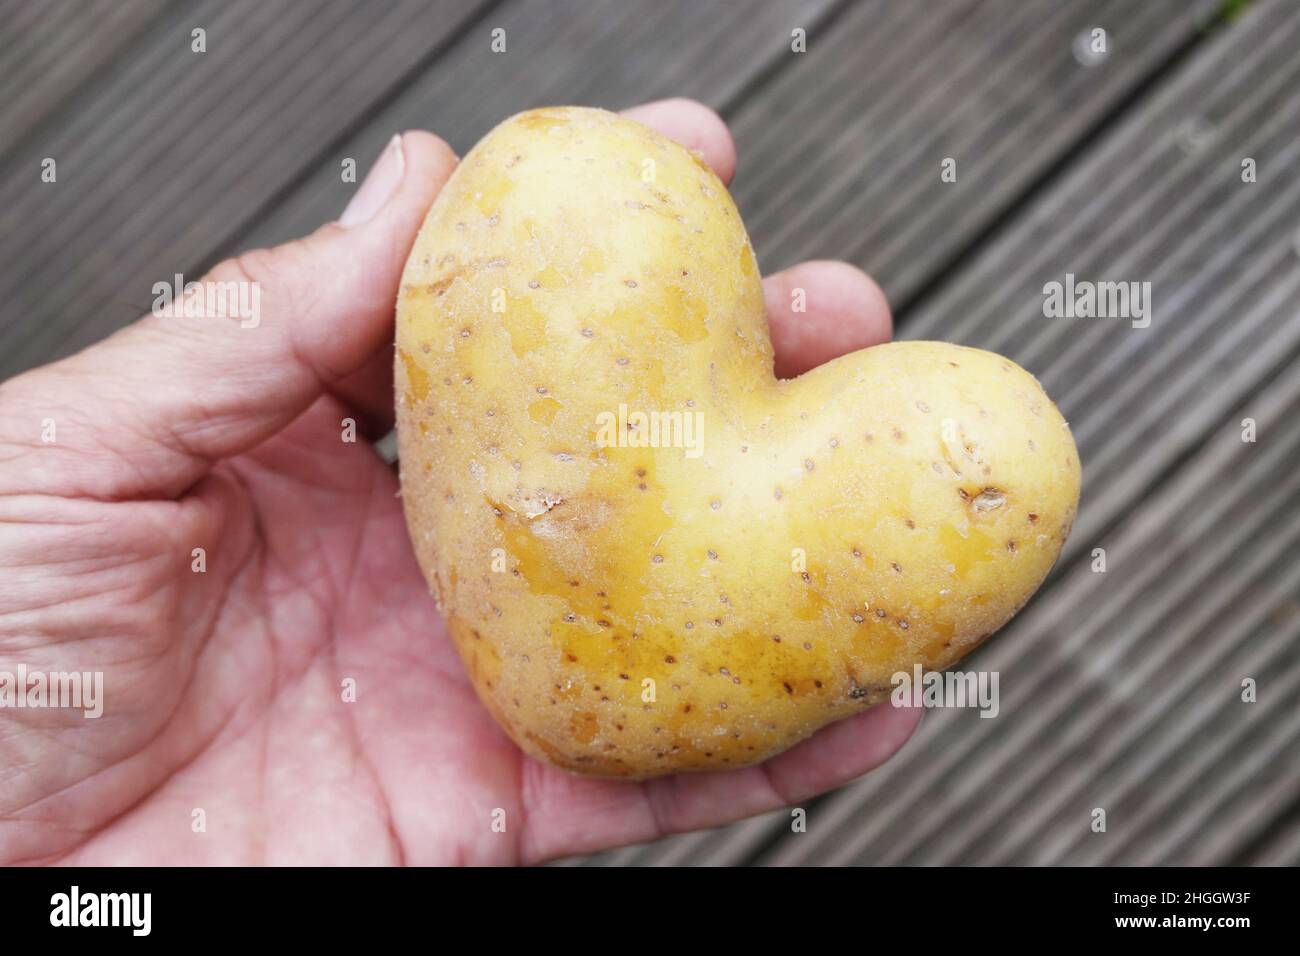 potato (Solanum tuberosum), potato in the shape of a heart lies on a man's hand Stock Photo